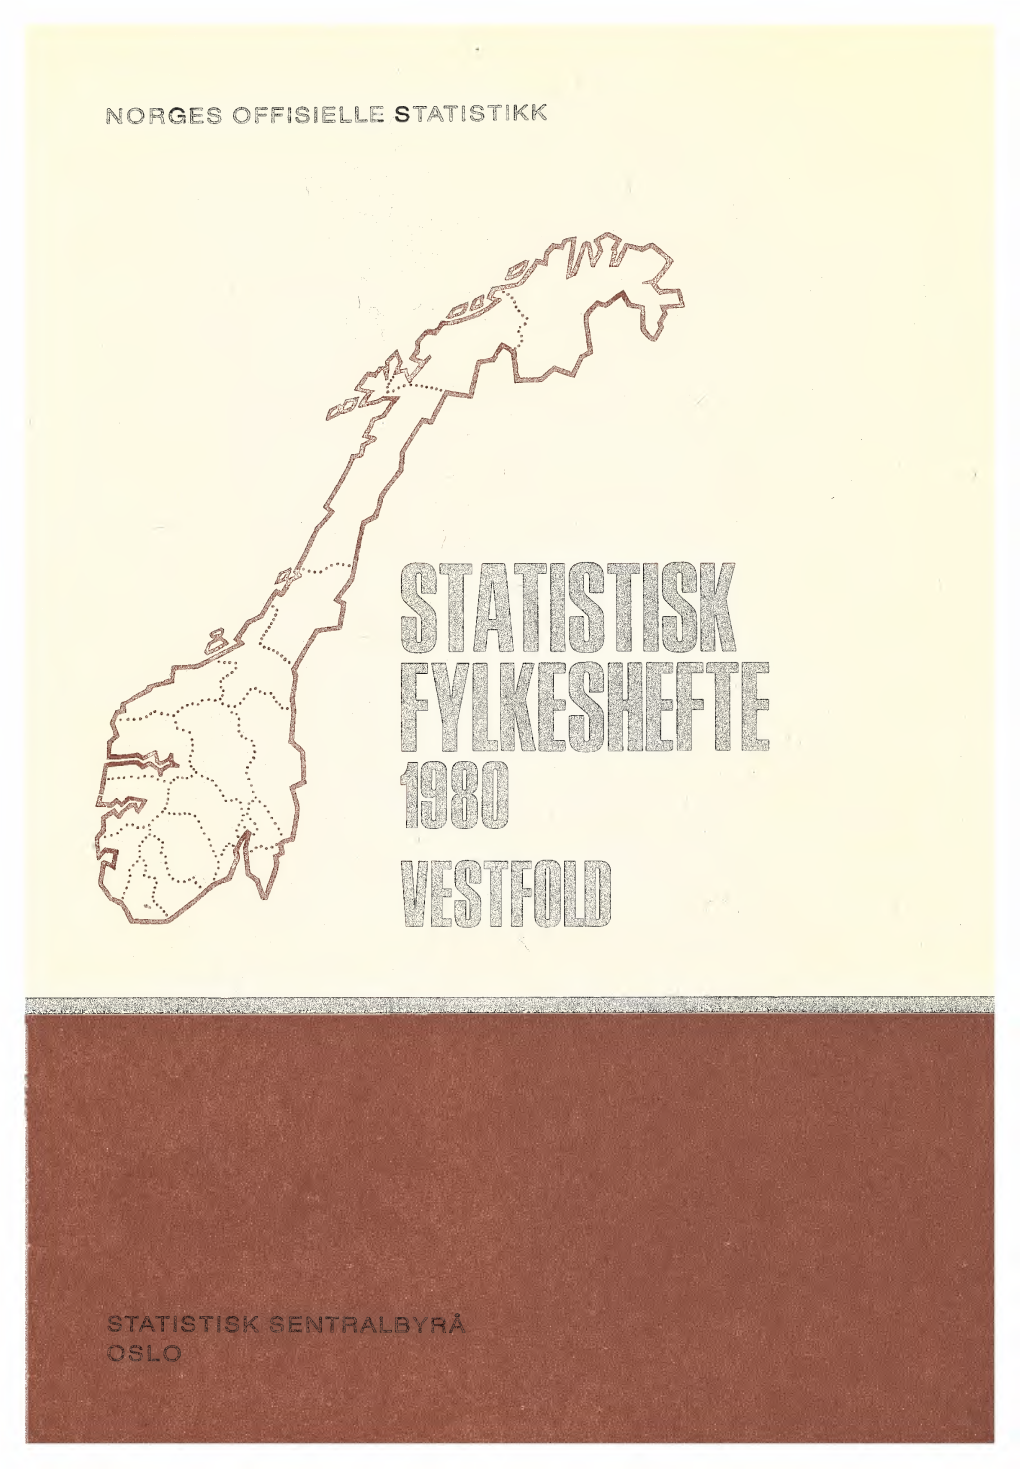 Statistisk Fylkeshefte 1980. Vestfold